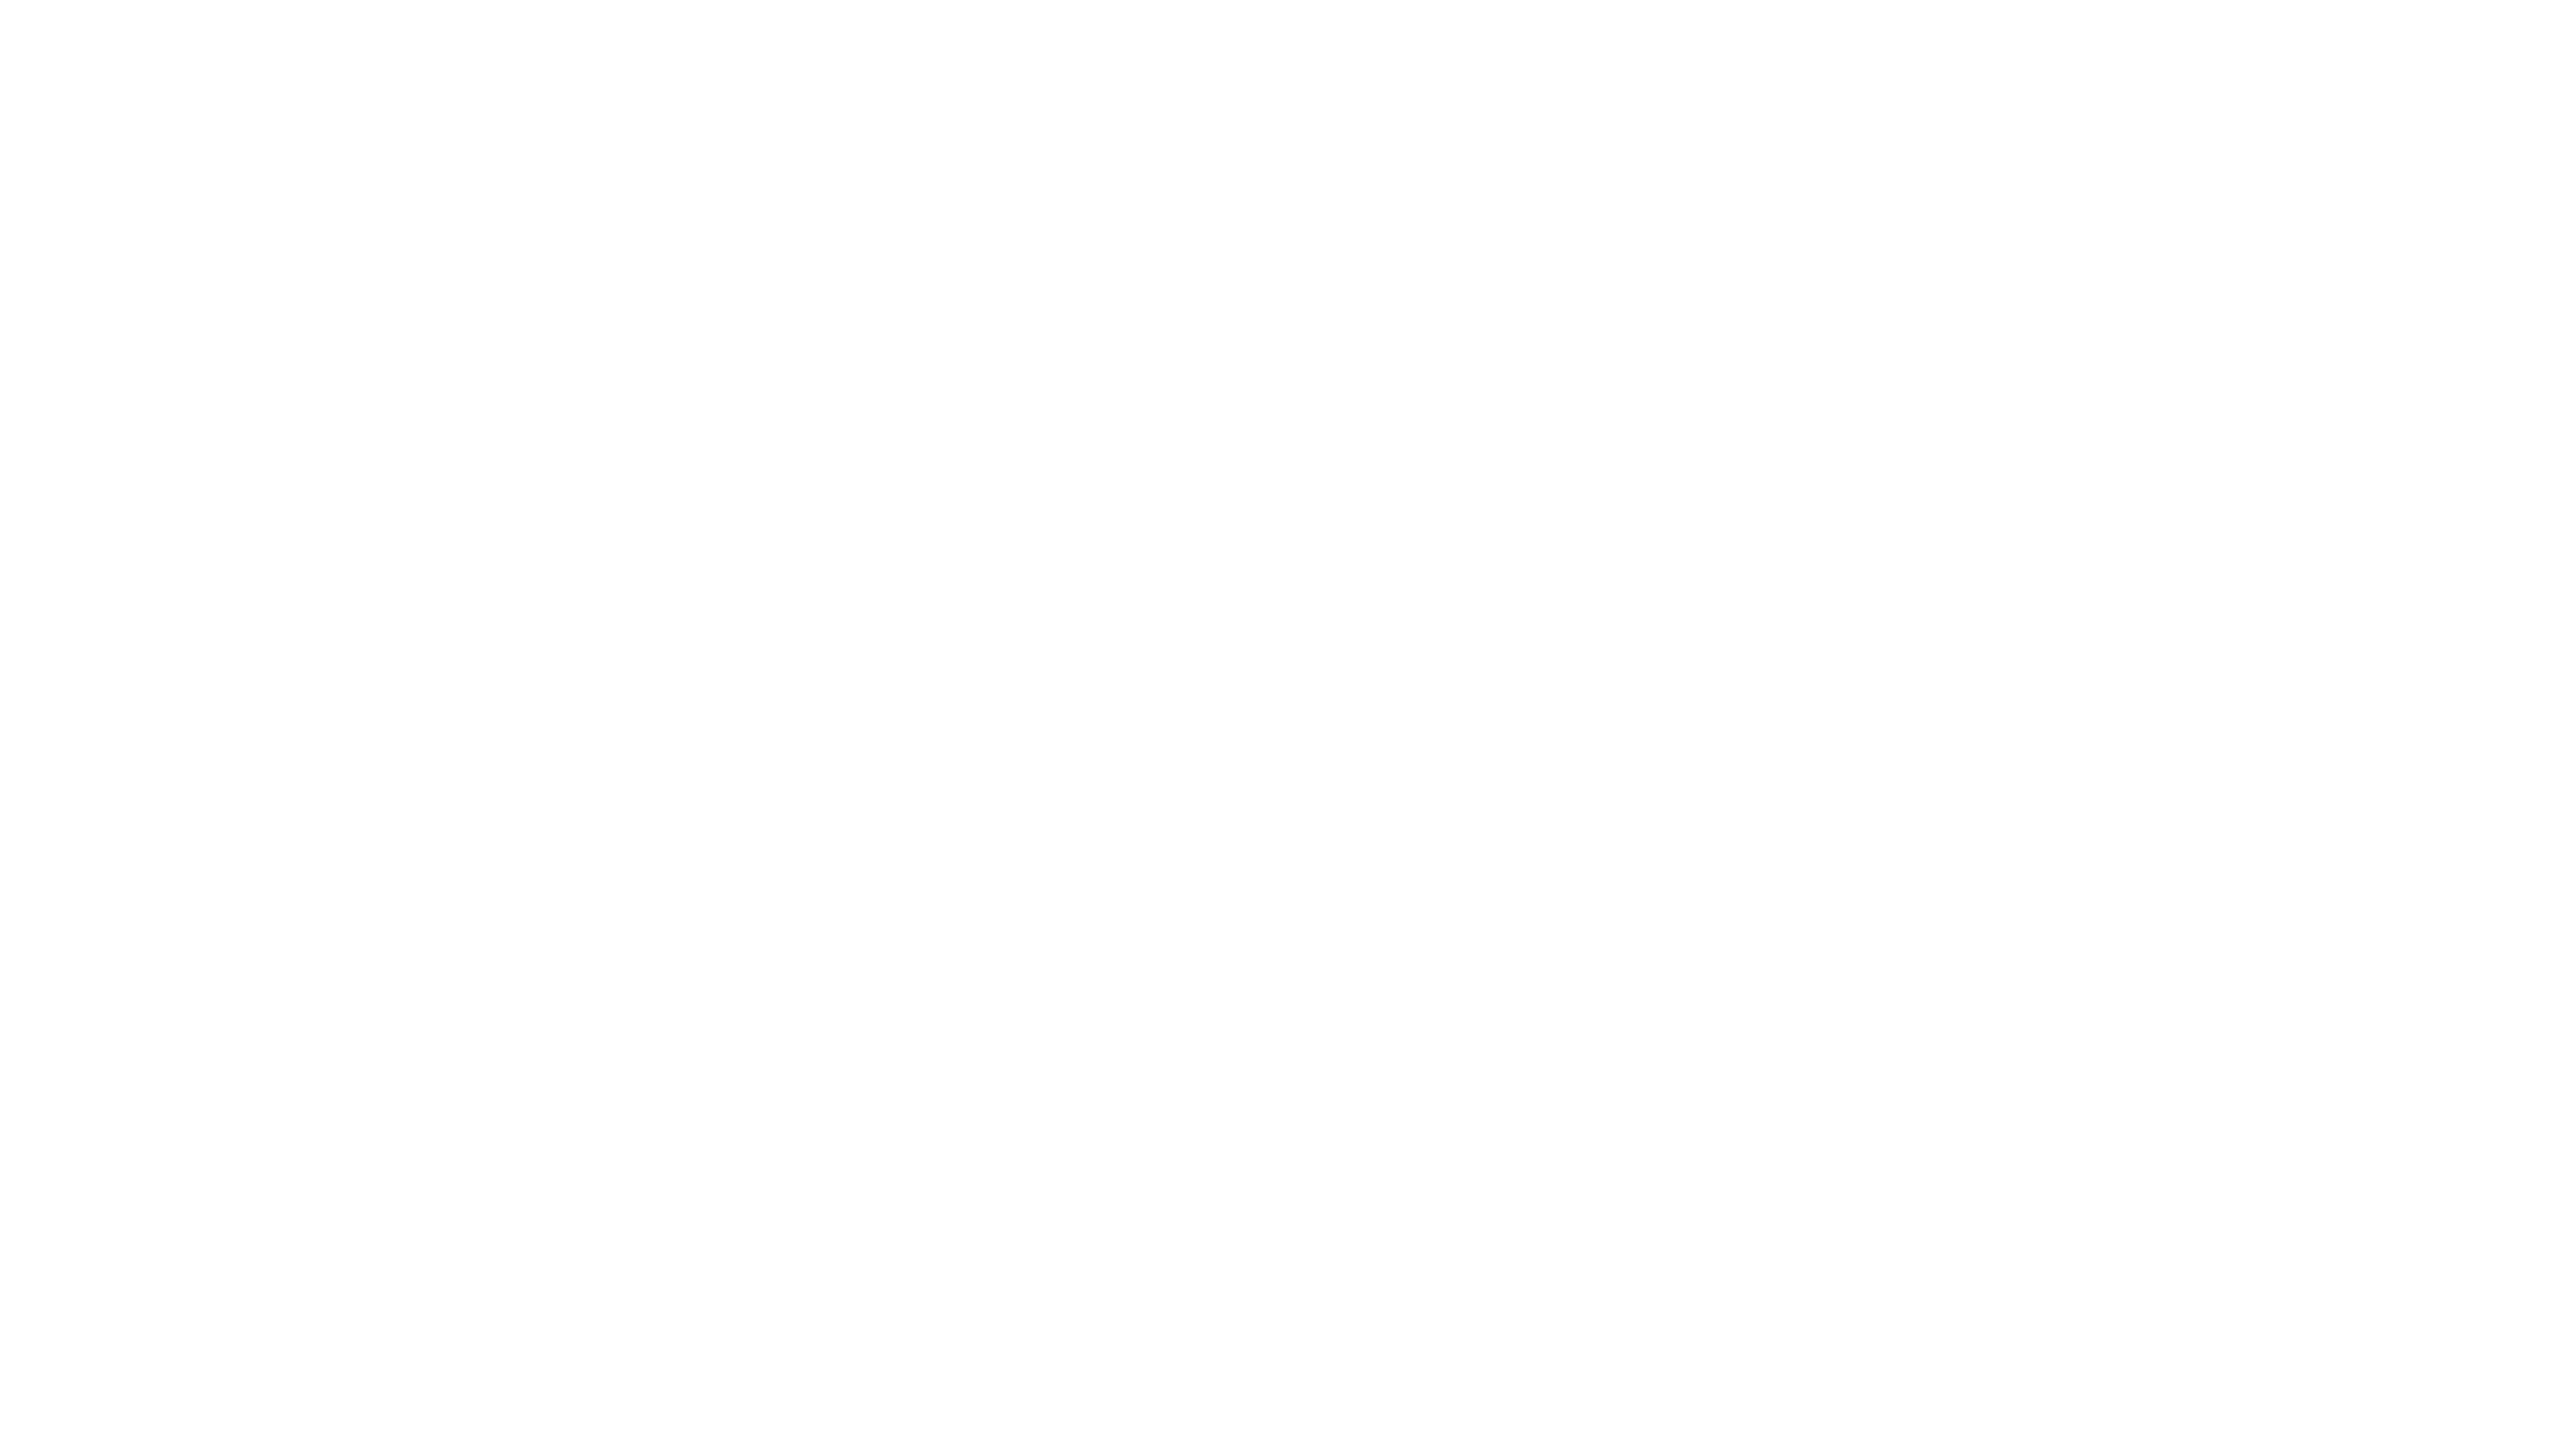 Association for Latin American Art